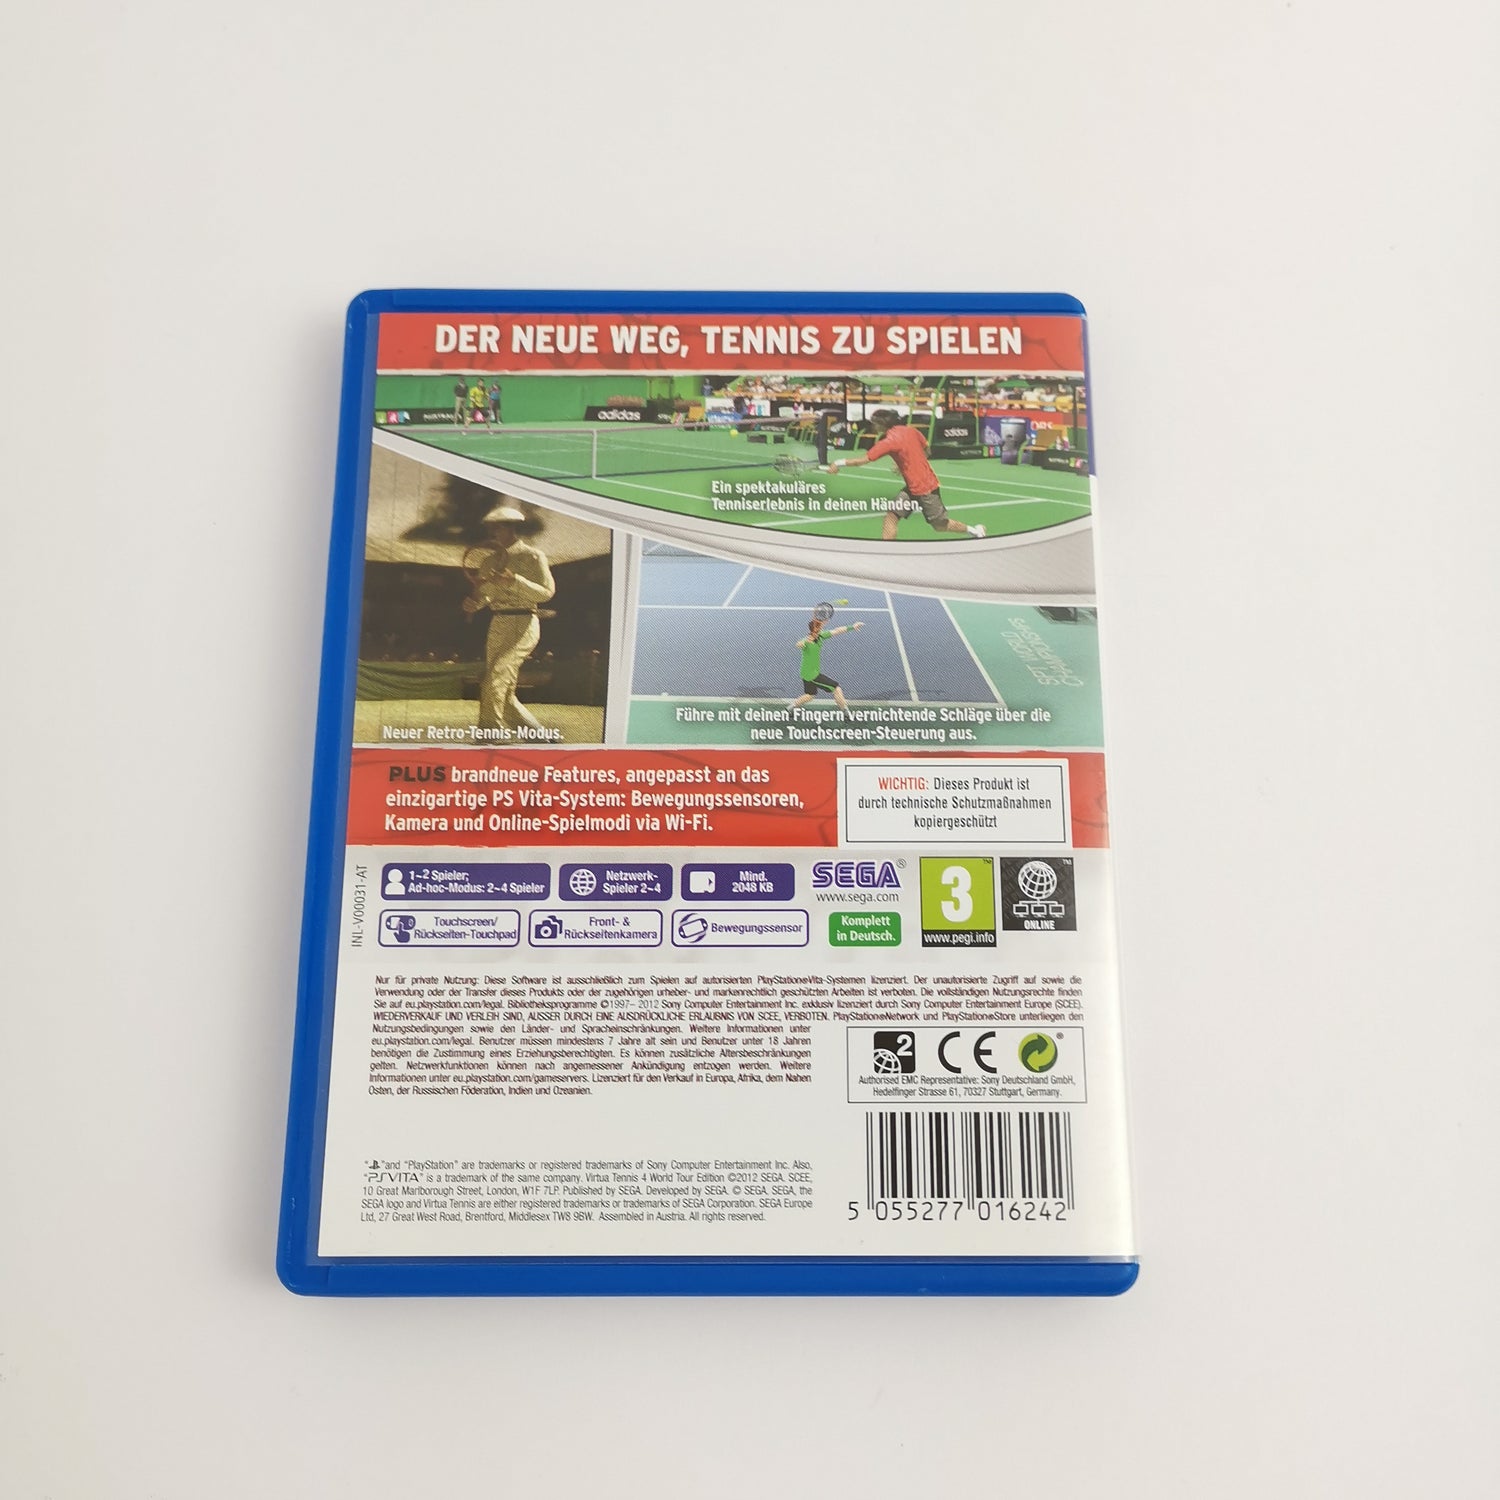 Sony PSVITA Game : Virtua Tennis 4 World Tour | Playstation PS VITA - handheld